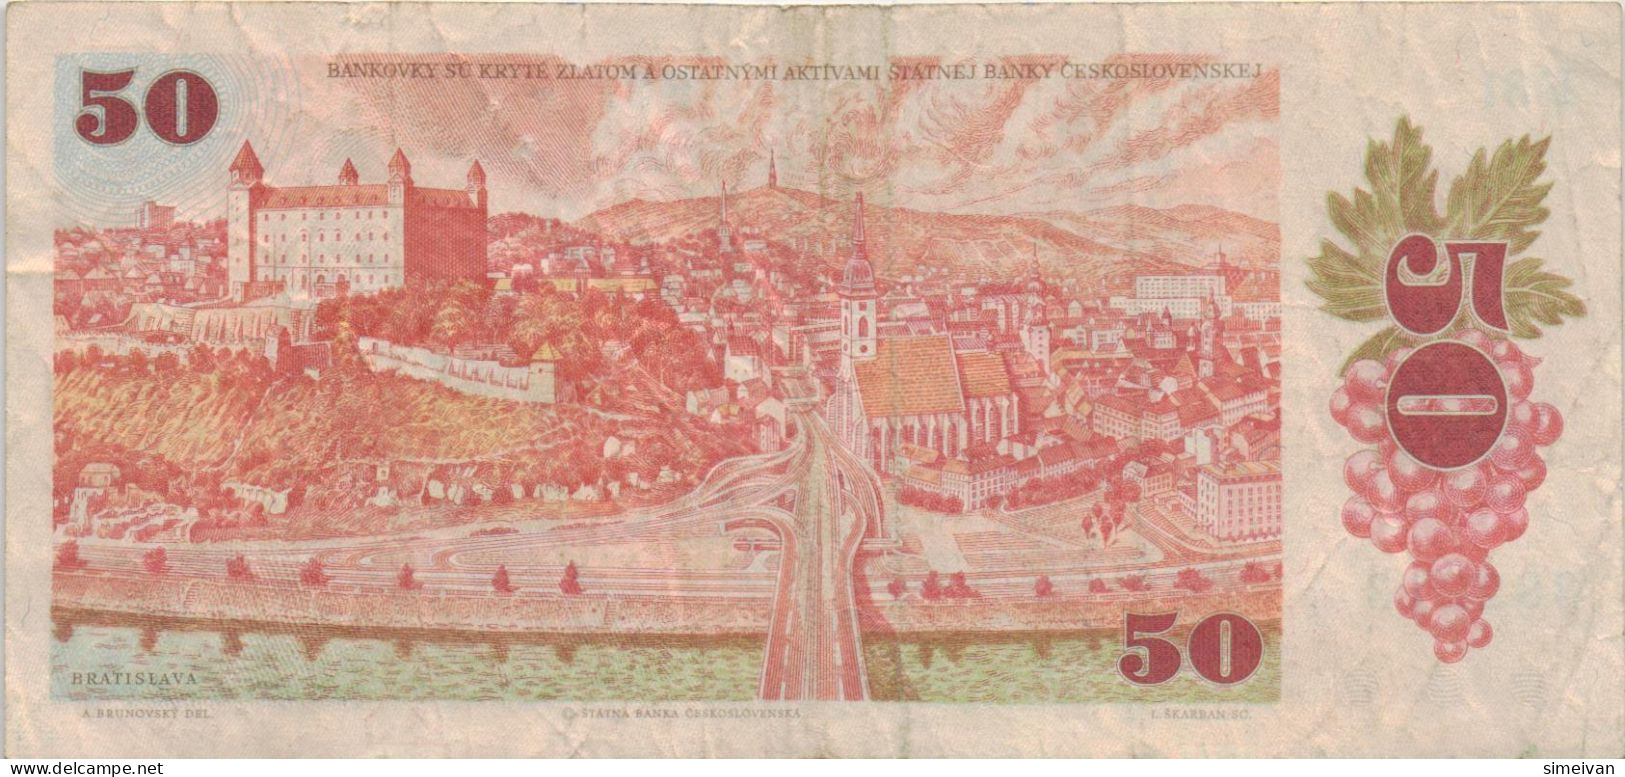 Czechoslovakia 50 Korun 1987 P-96a Banknote Europe Currency Tchécoslovaquie Tschechoslowakei #5258 - Checoslovaquia